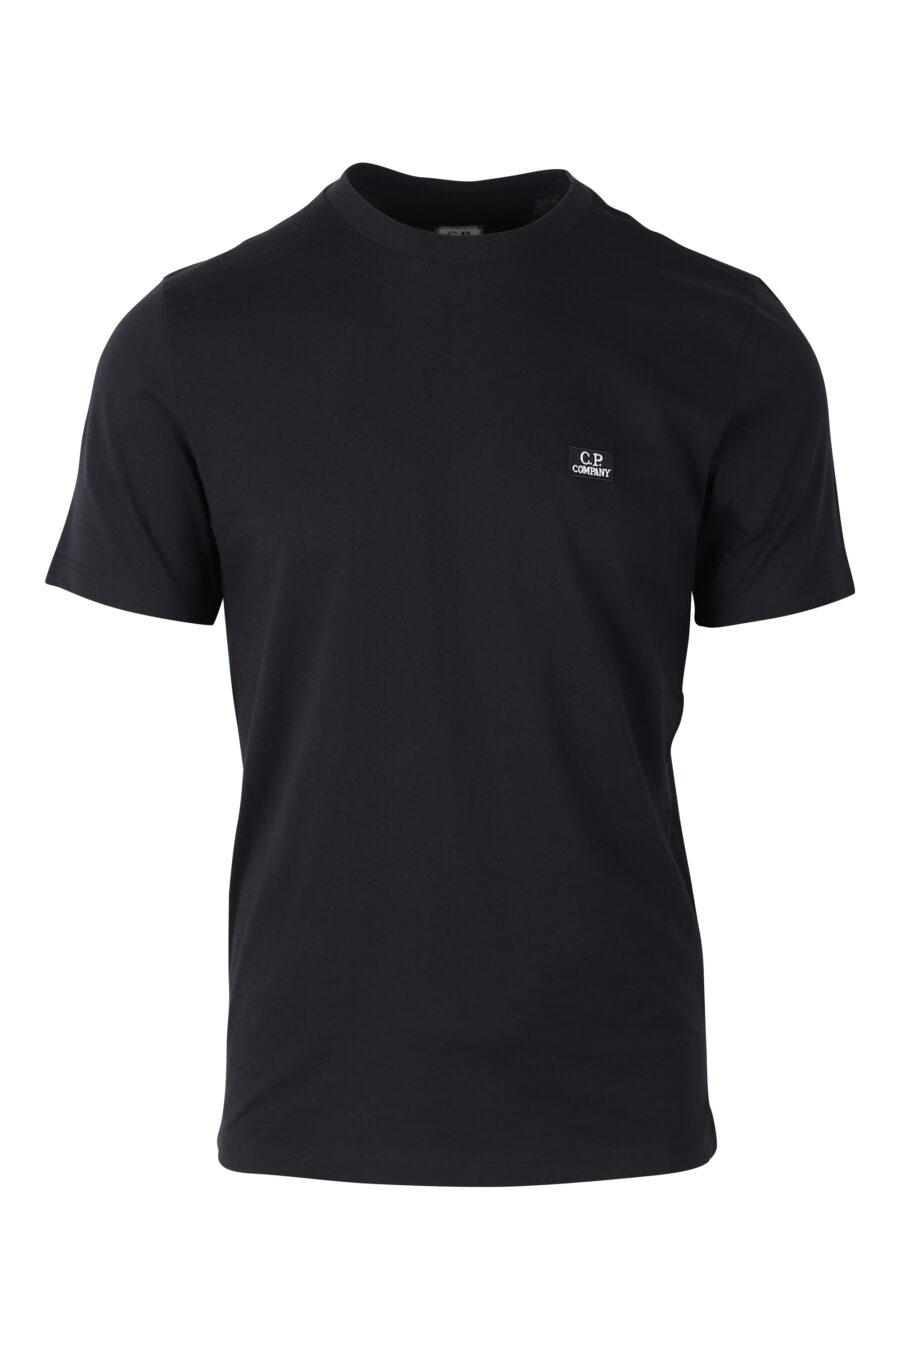 Camiseta negra con logotipo parche - IMG 2385